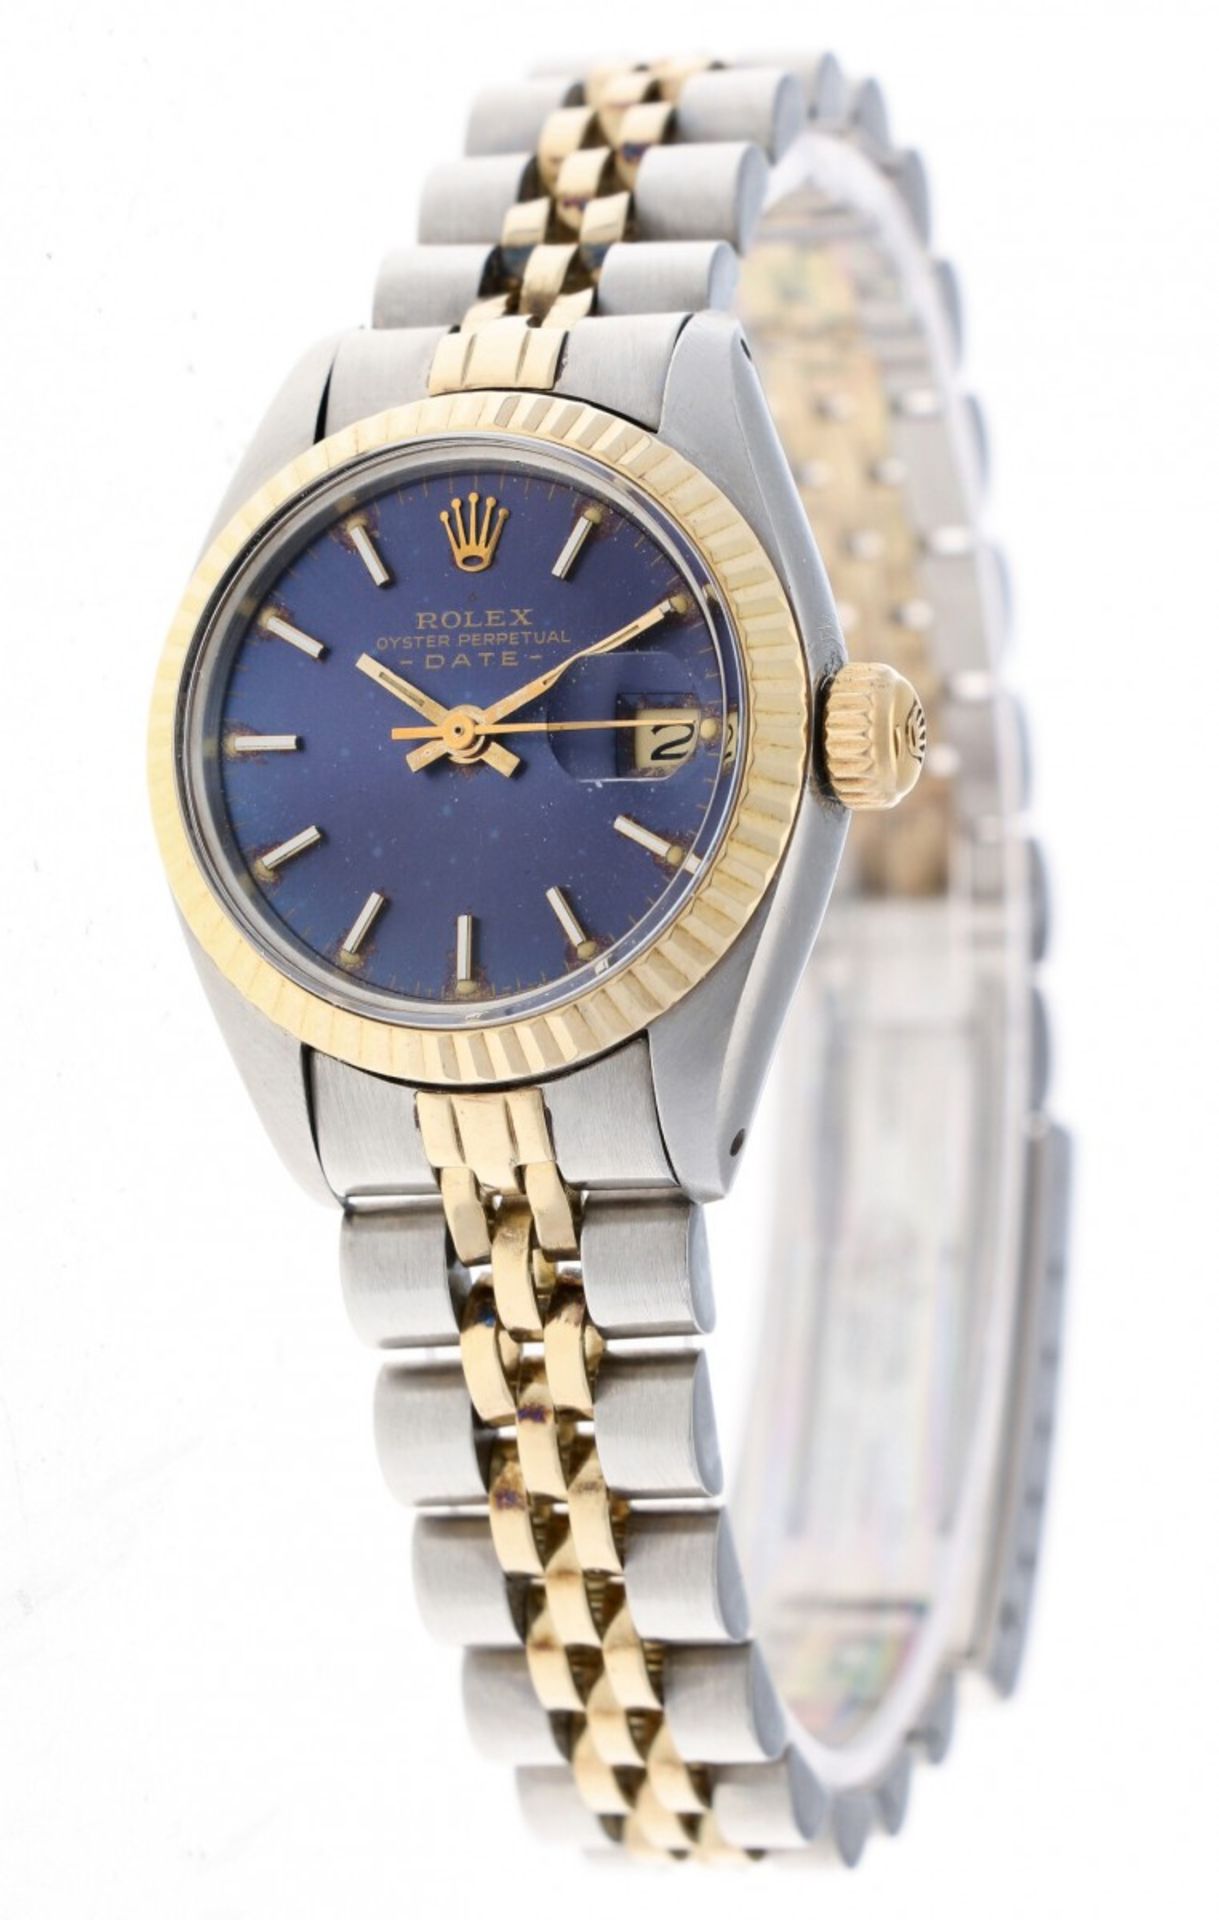 Rolex Date 6917 - Ladies watch - ca. 1979 - Image 2 of 5